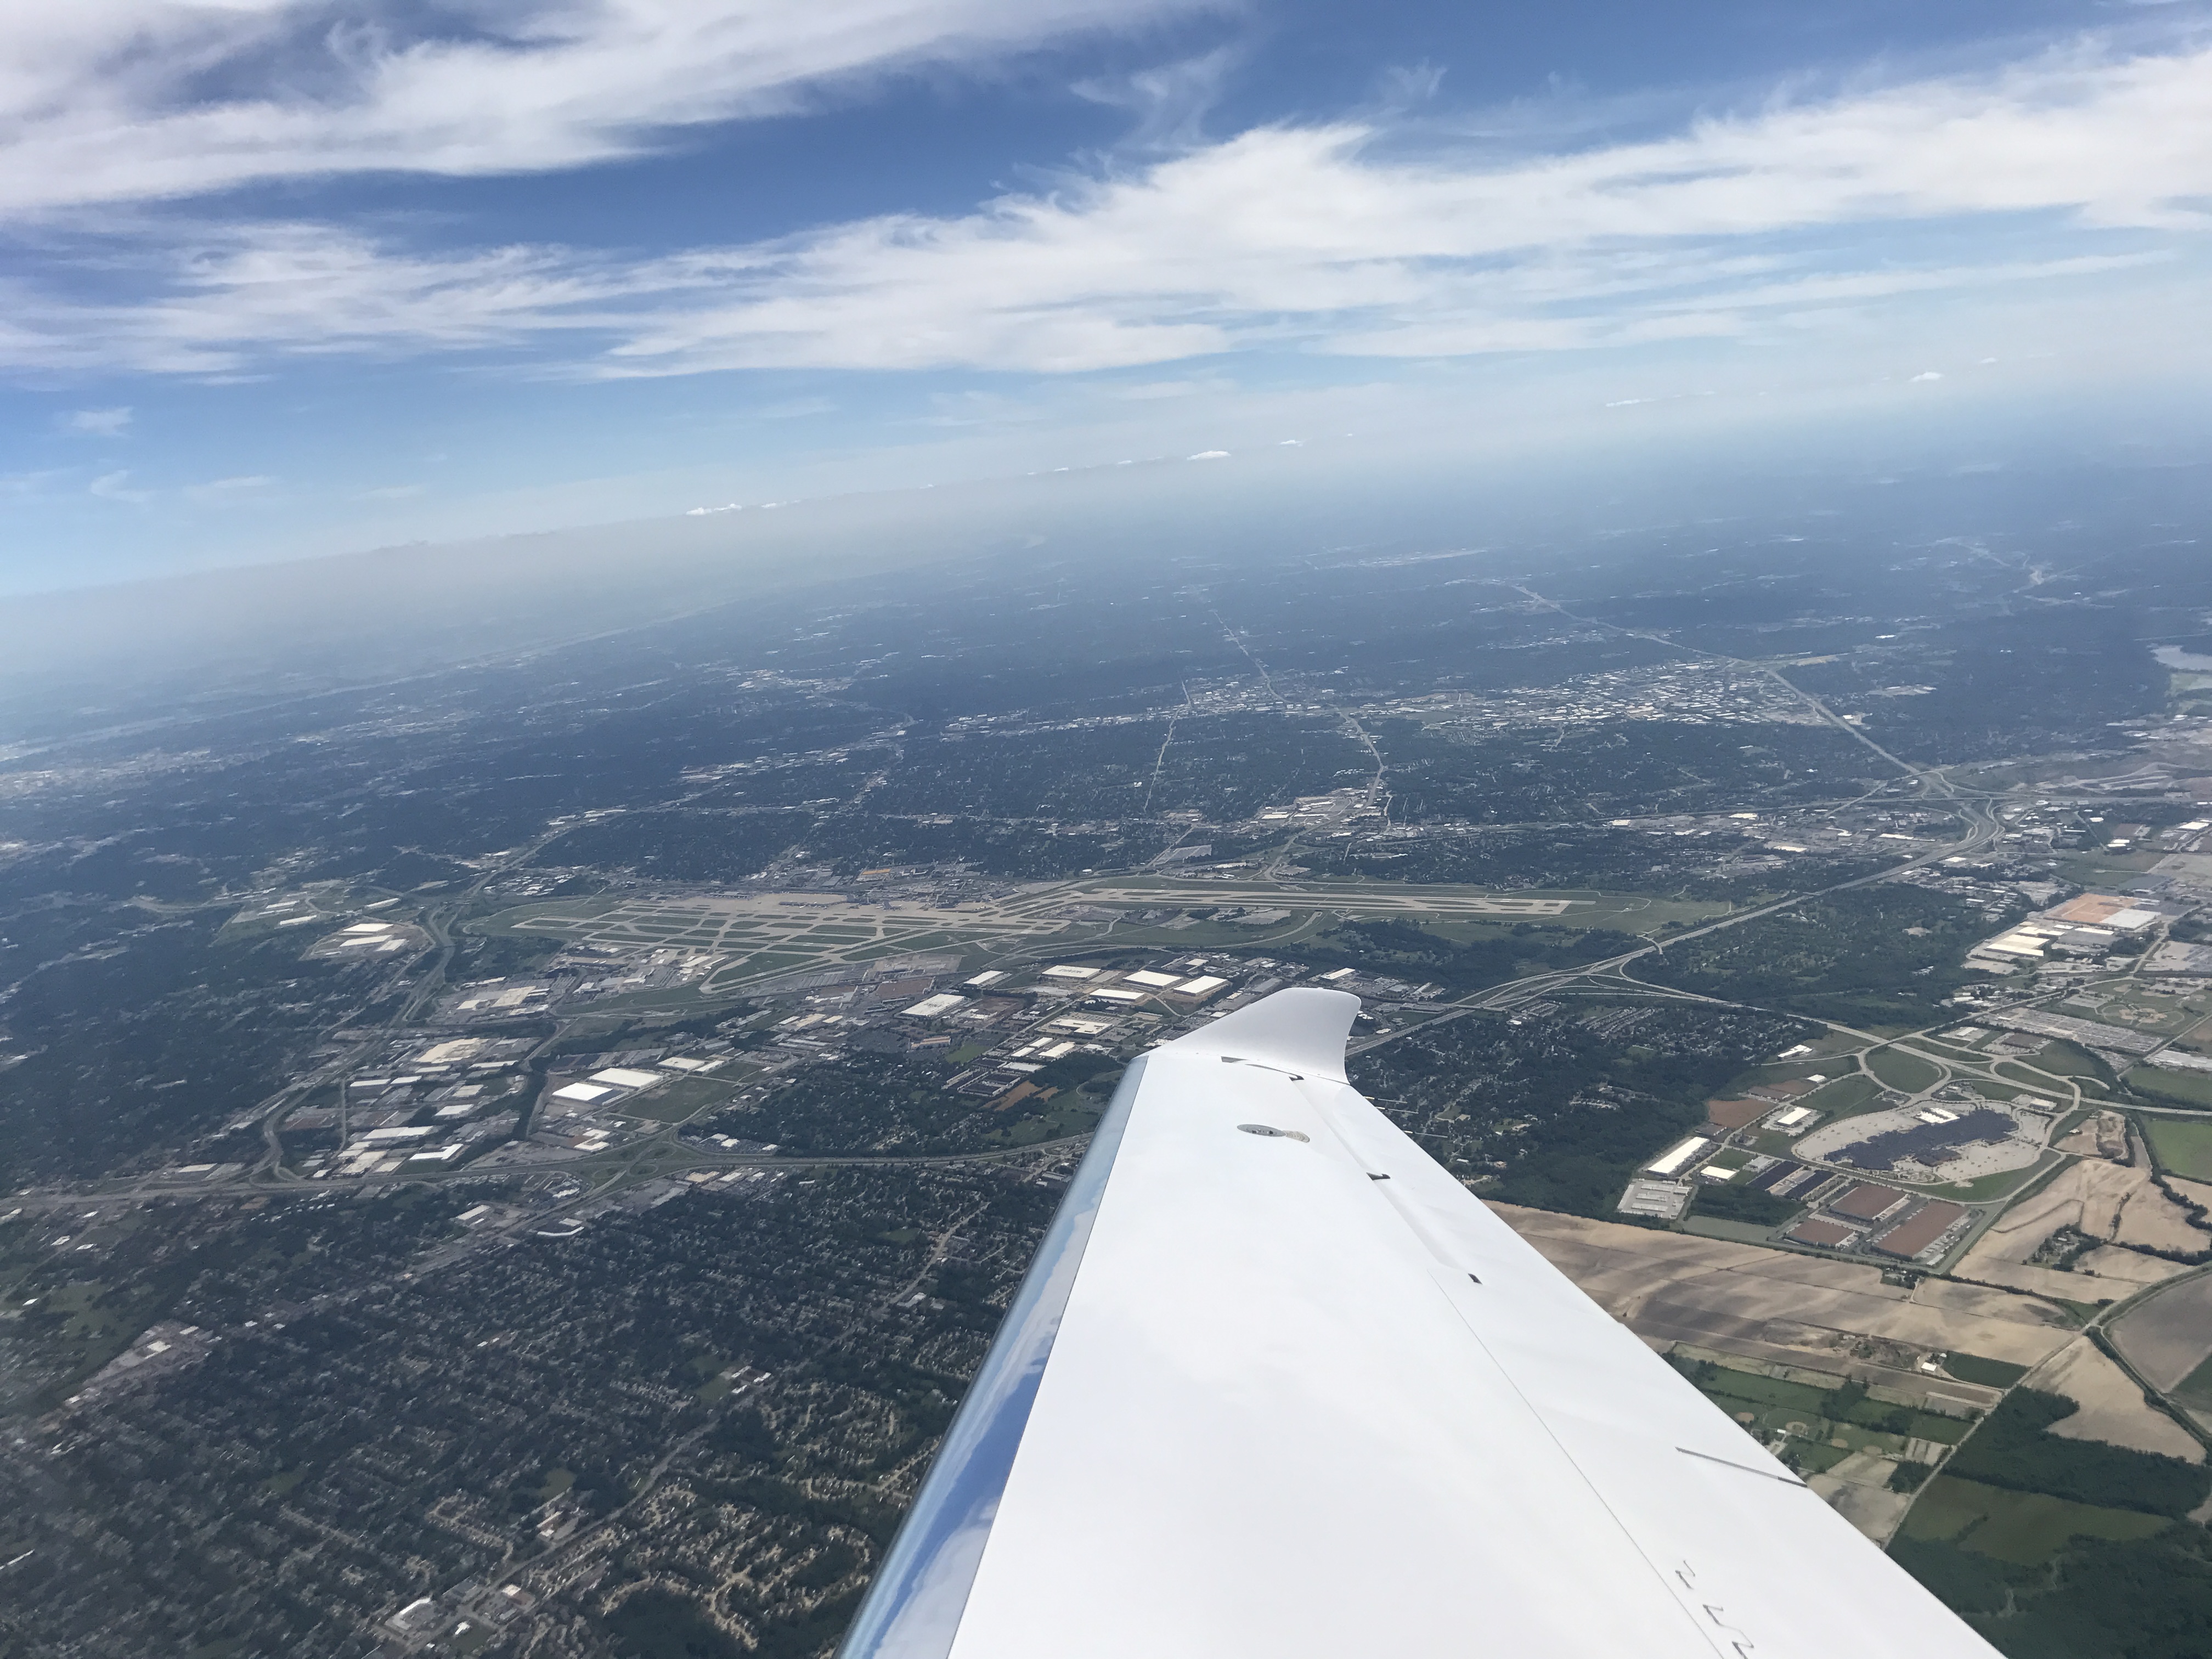 View of St. Louis-Lambert International Airport after takeoff